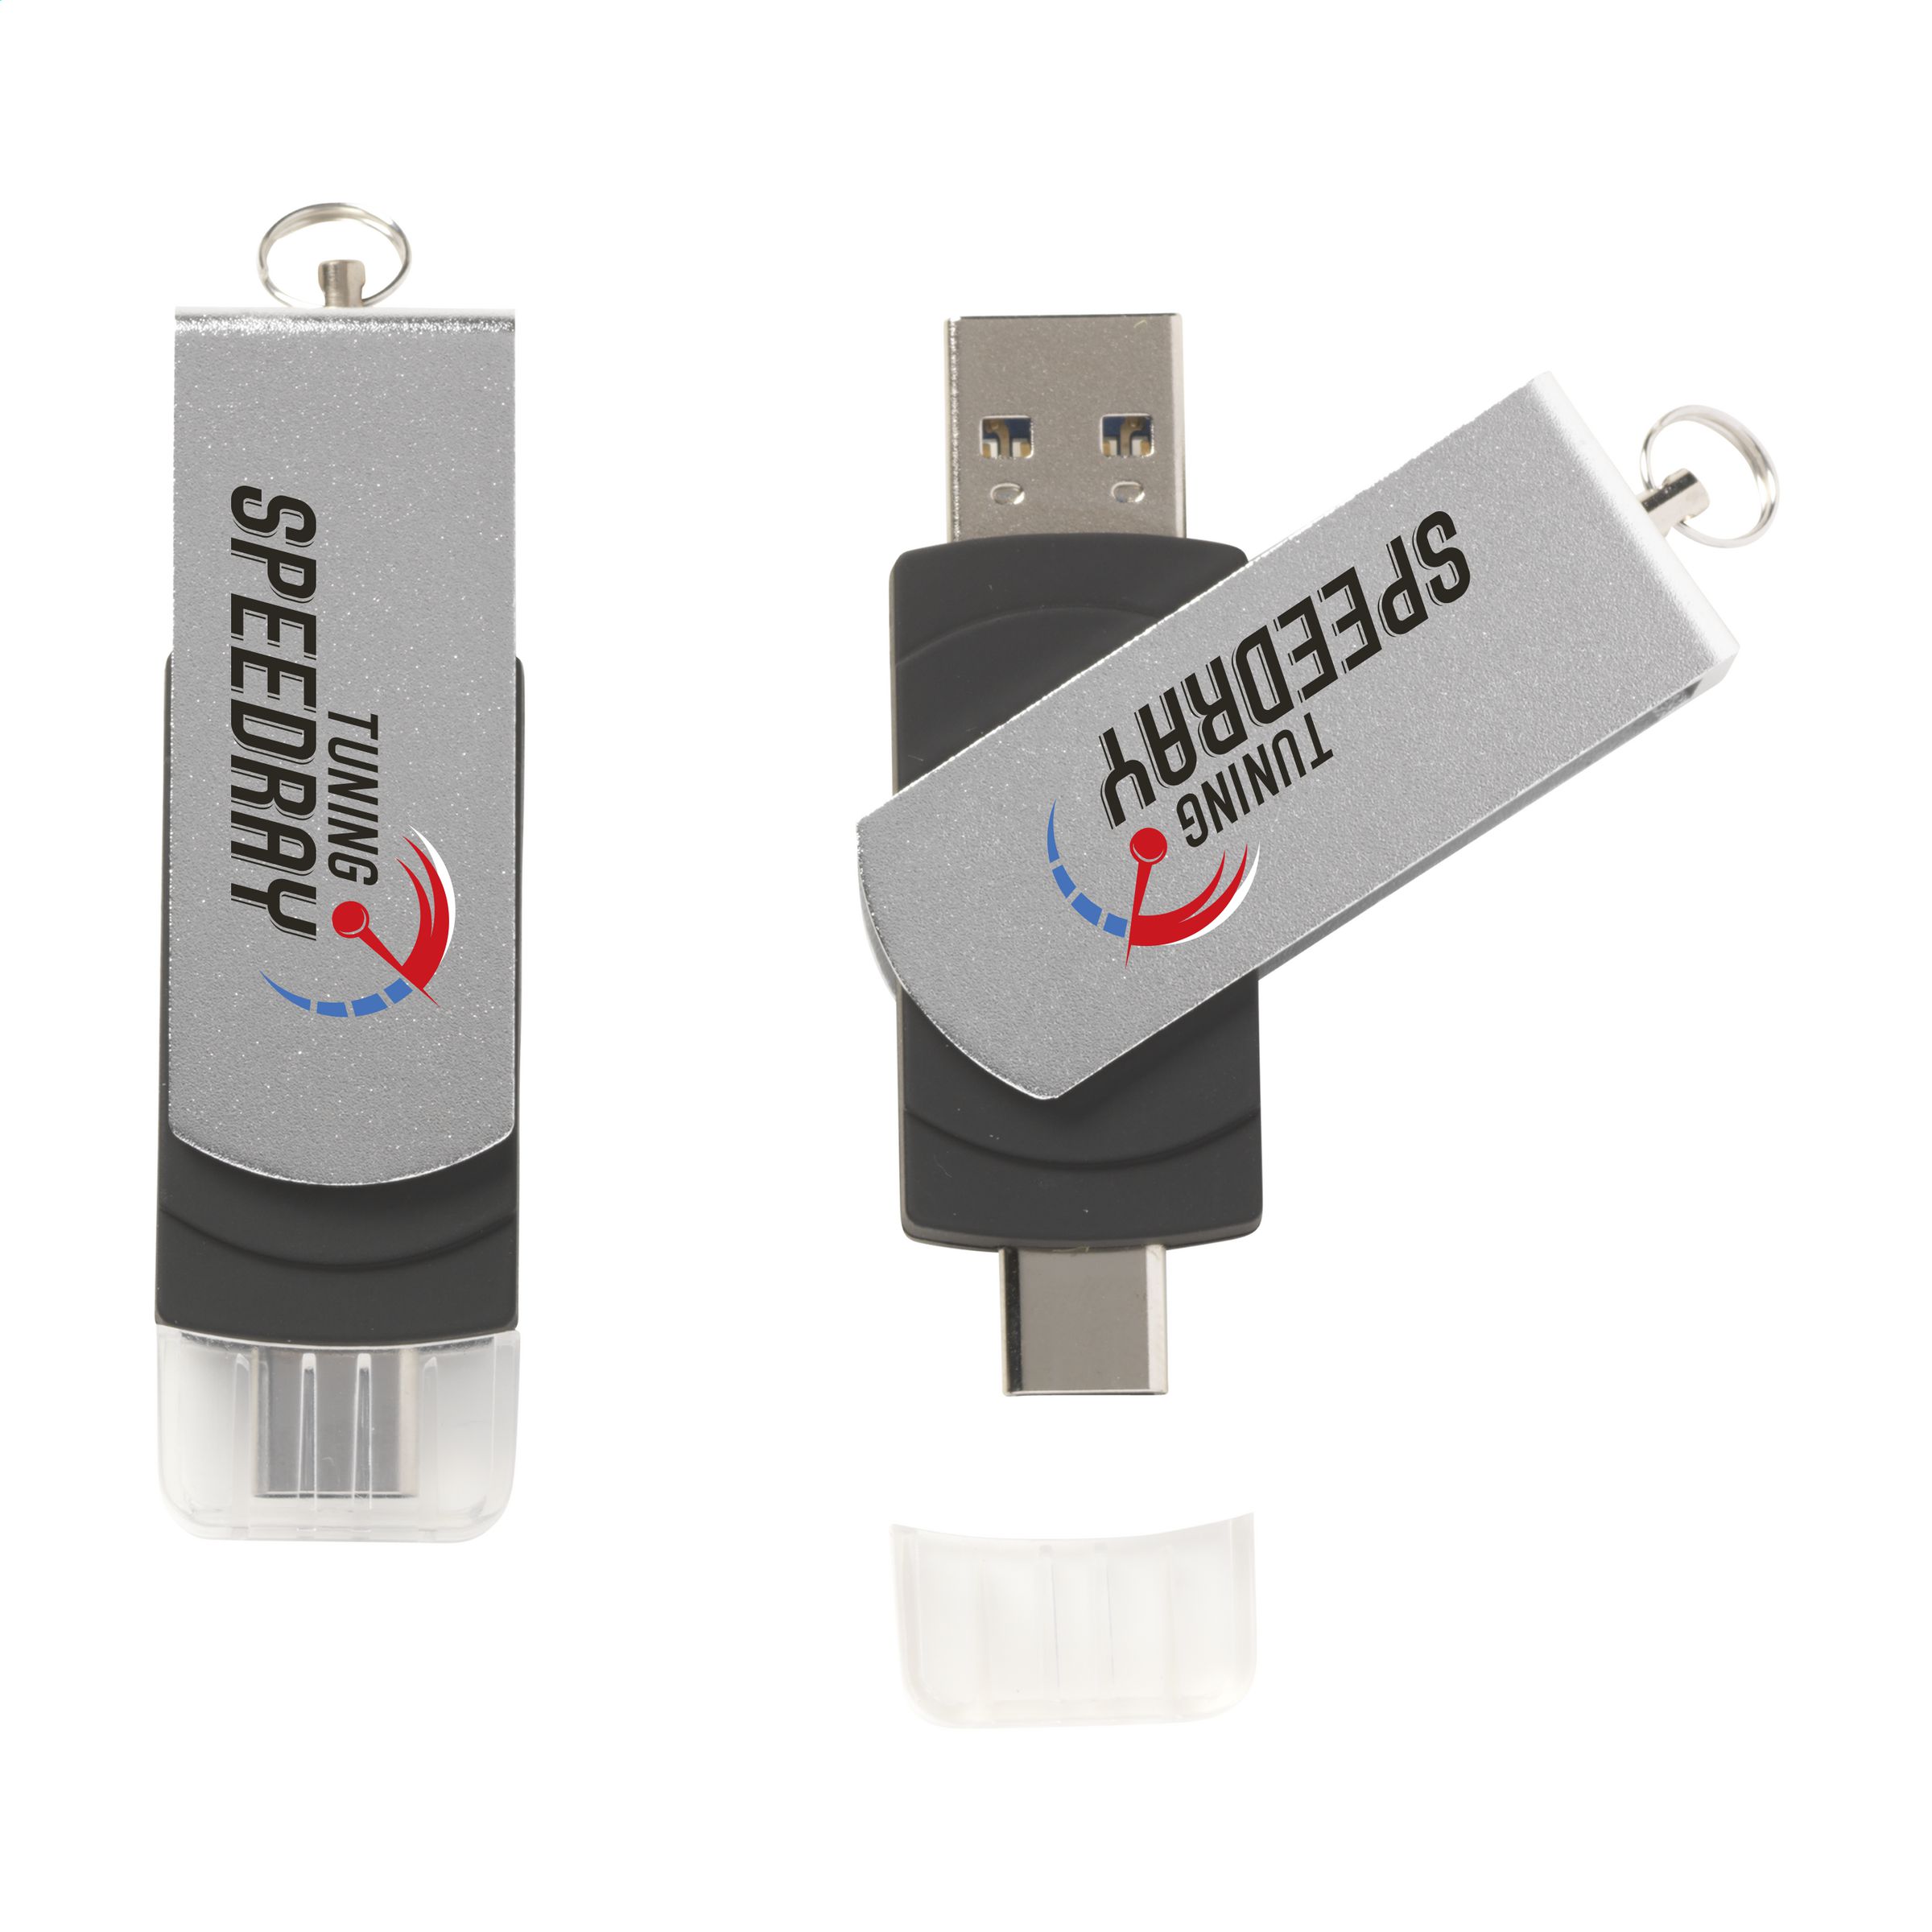 Chiavetta USB DuoLink - Venaria Reale